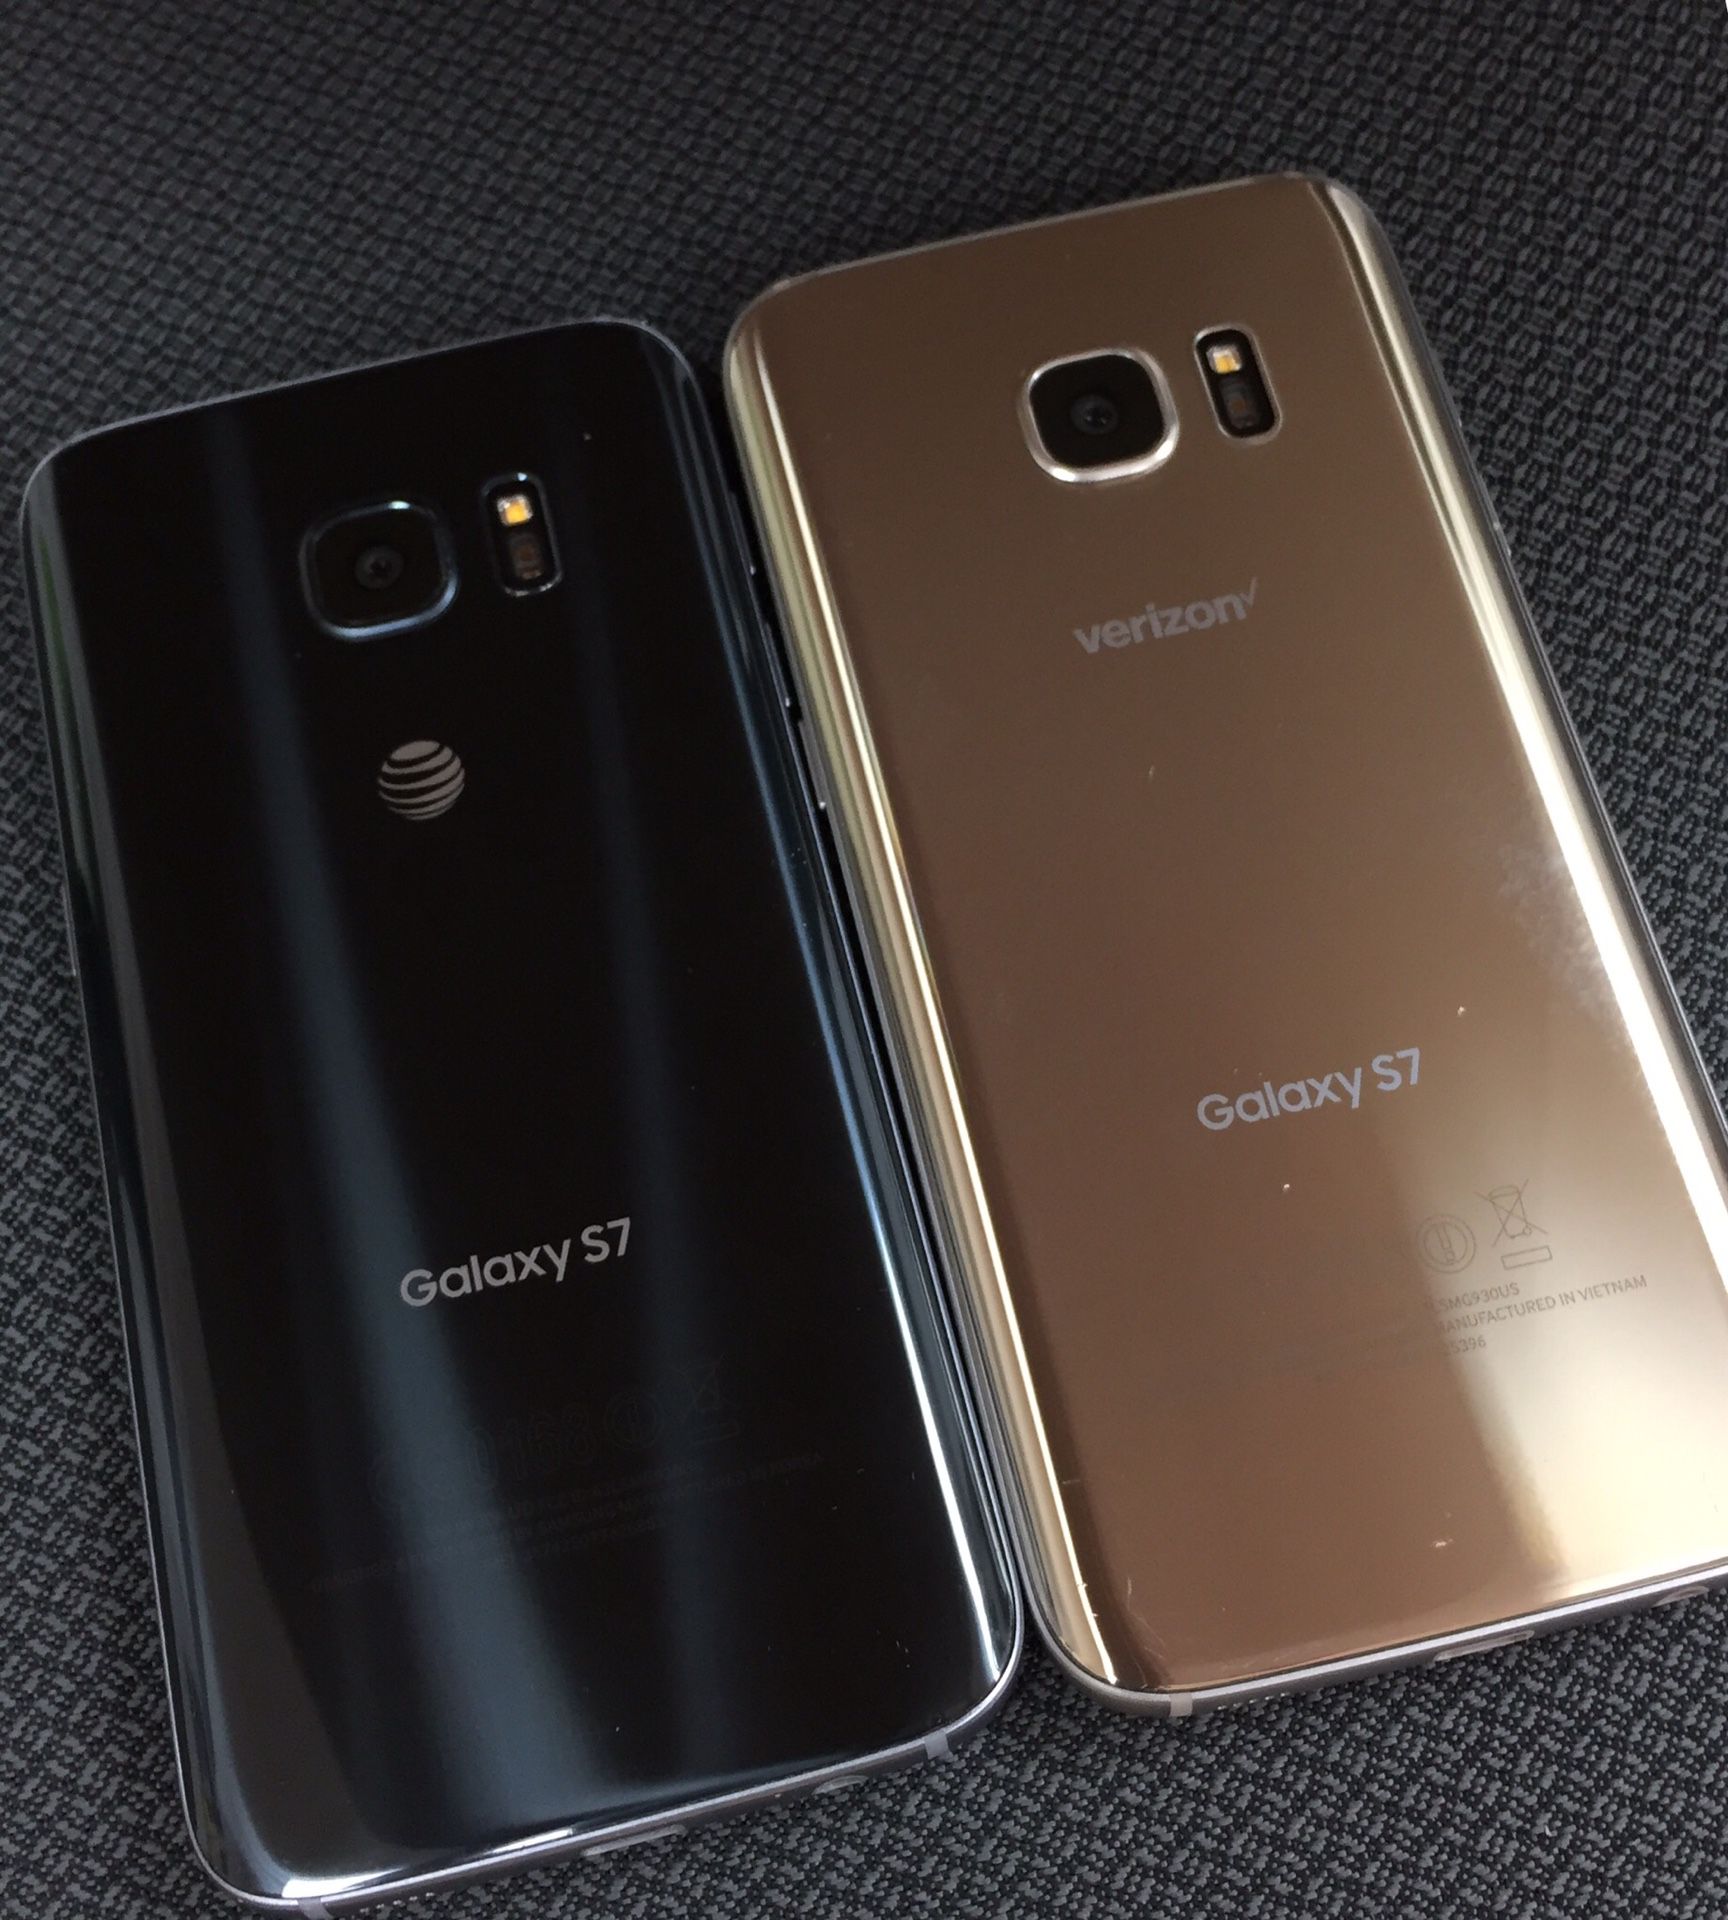 Samsung Galaxy S7 Unlocked Like New Condition With 30 Days Warranty